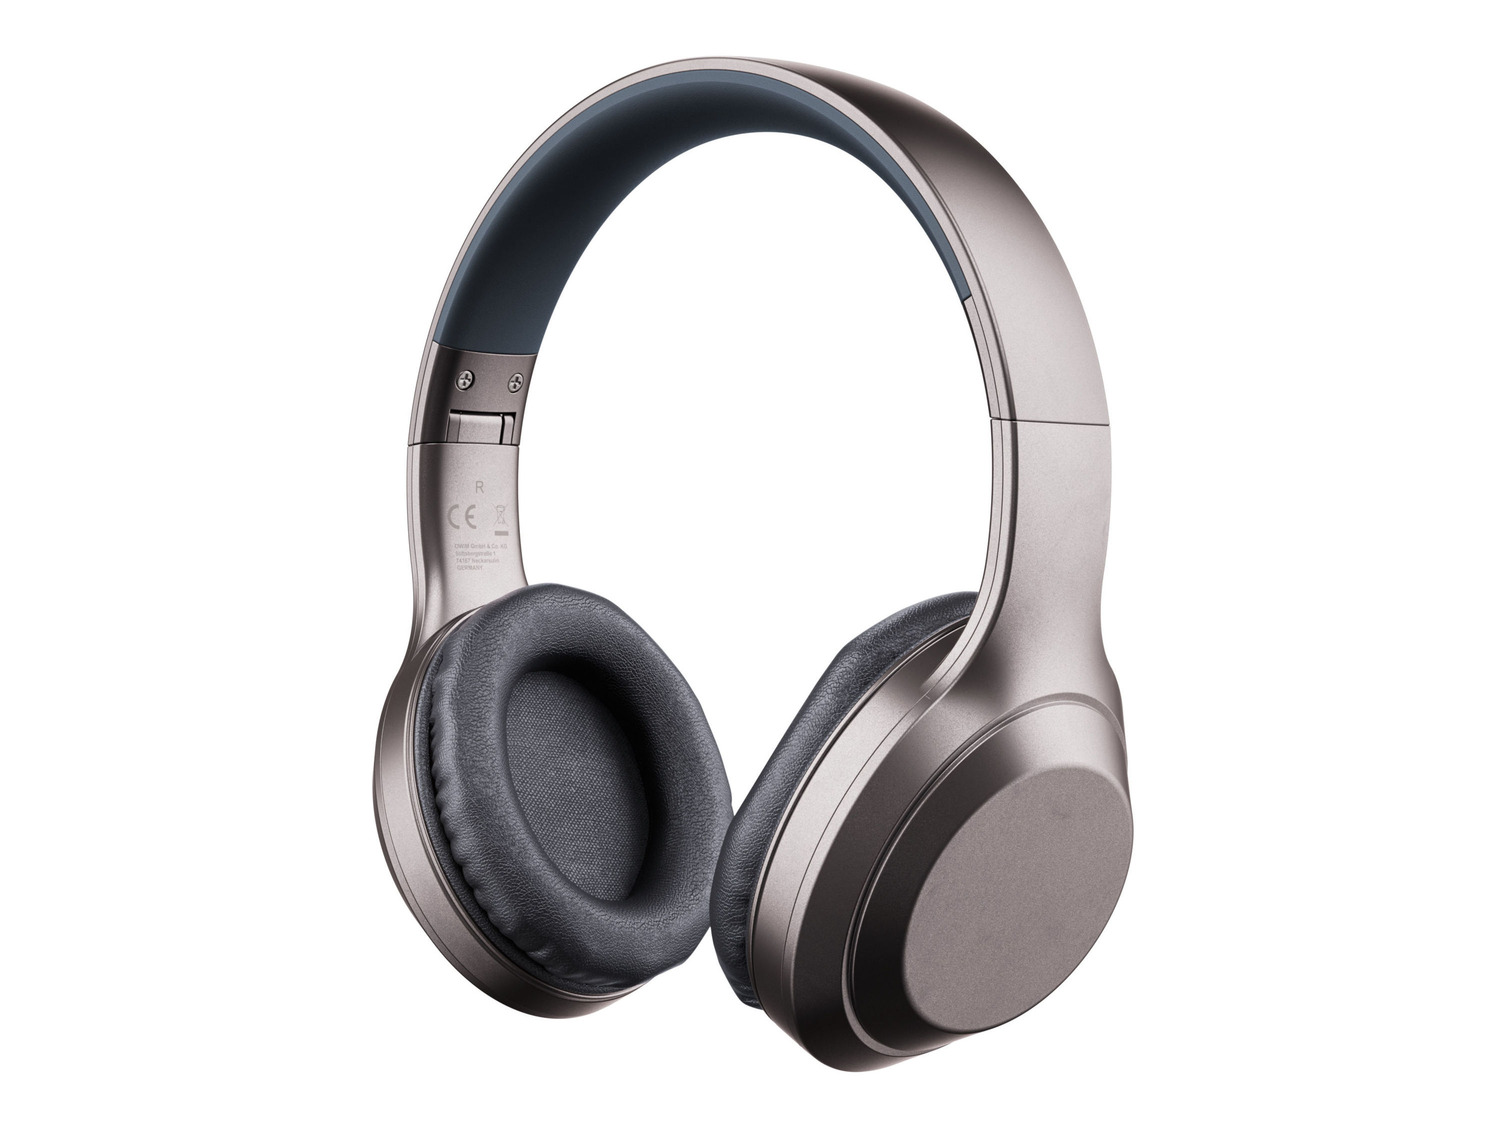 Kaufen SILVERCREST® On Ear Deals Friday Bluetooth Kopfhörer | Mesjeuxipad ZR7068 Black